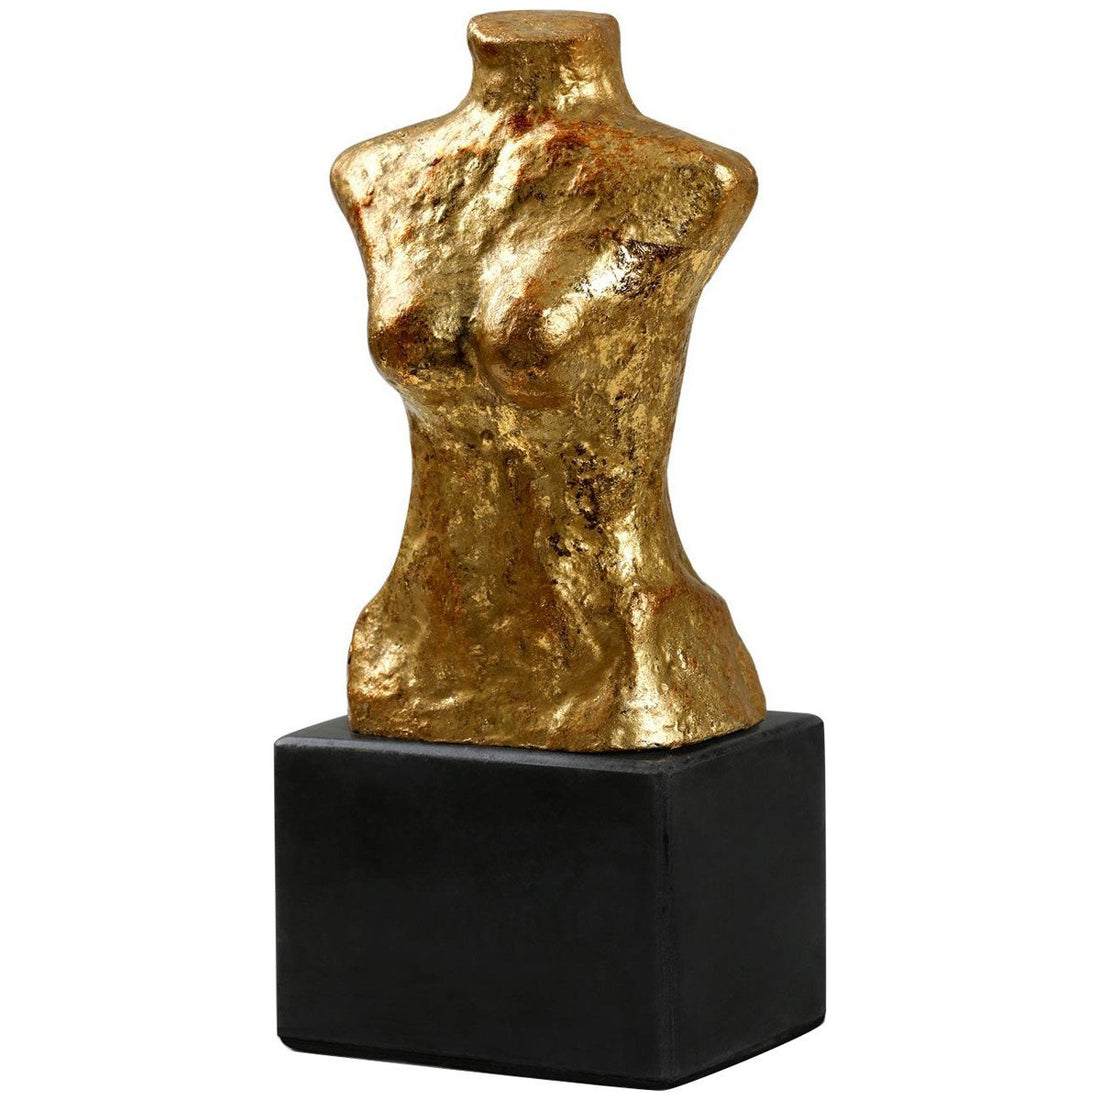 Bungalow 5 Milo Statue in Gold